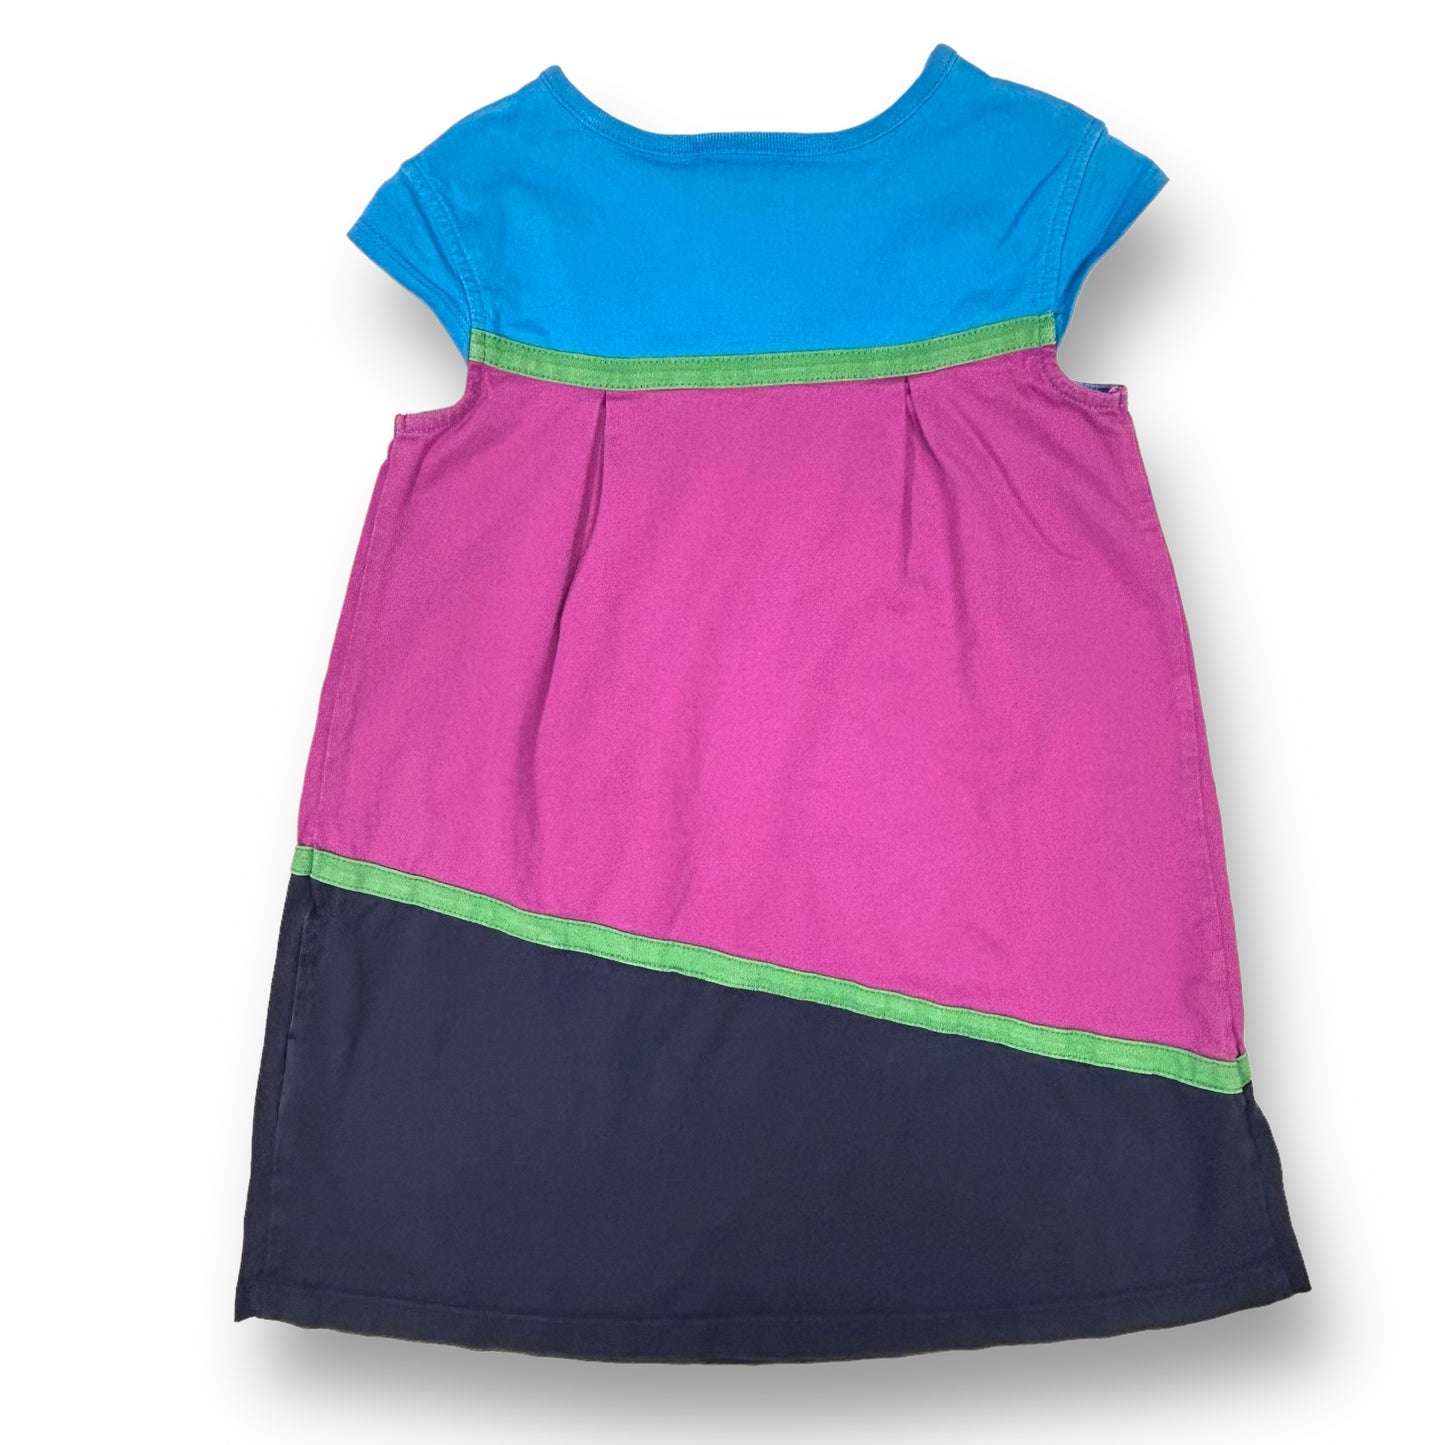 Girls Hanna Andersson Size 5 110 Blue/Purple Cotton Dress